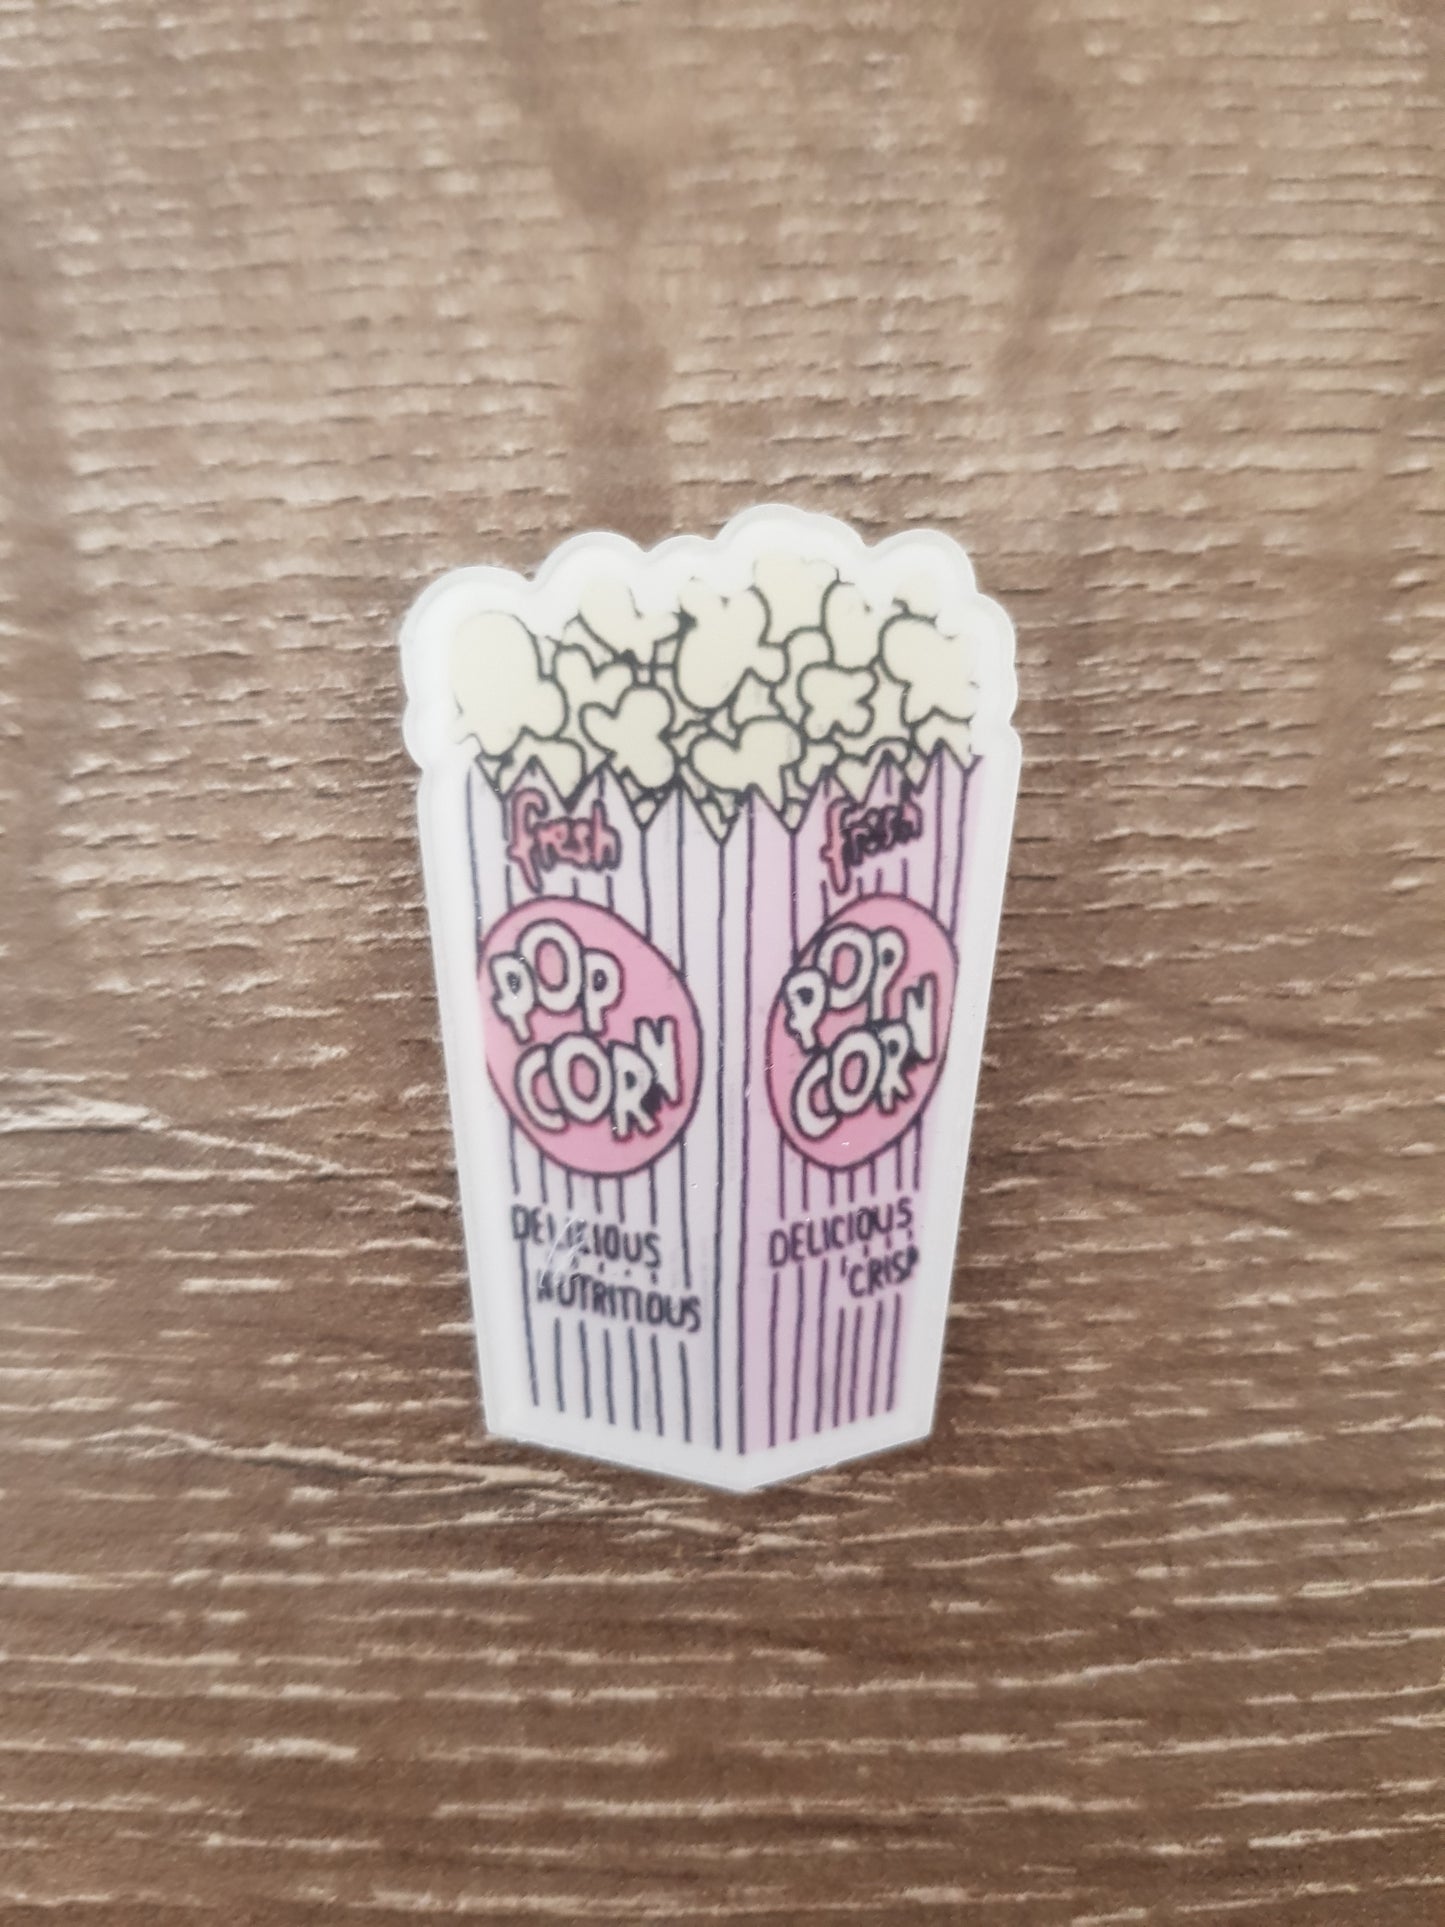 Popcorn Box Brooch/Badge